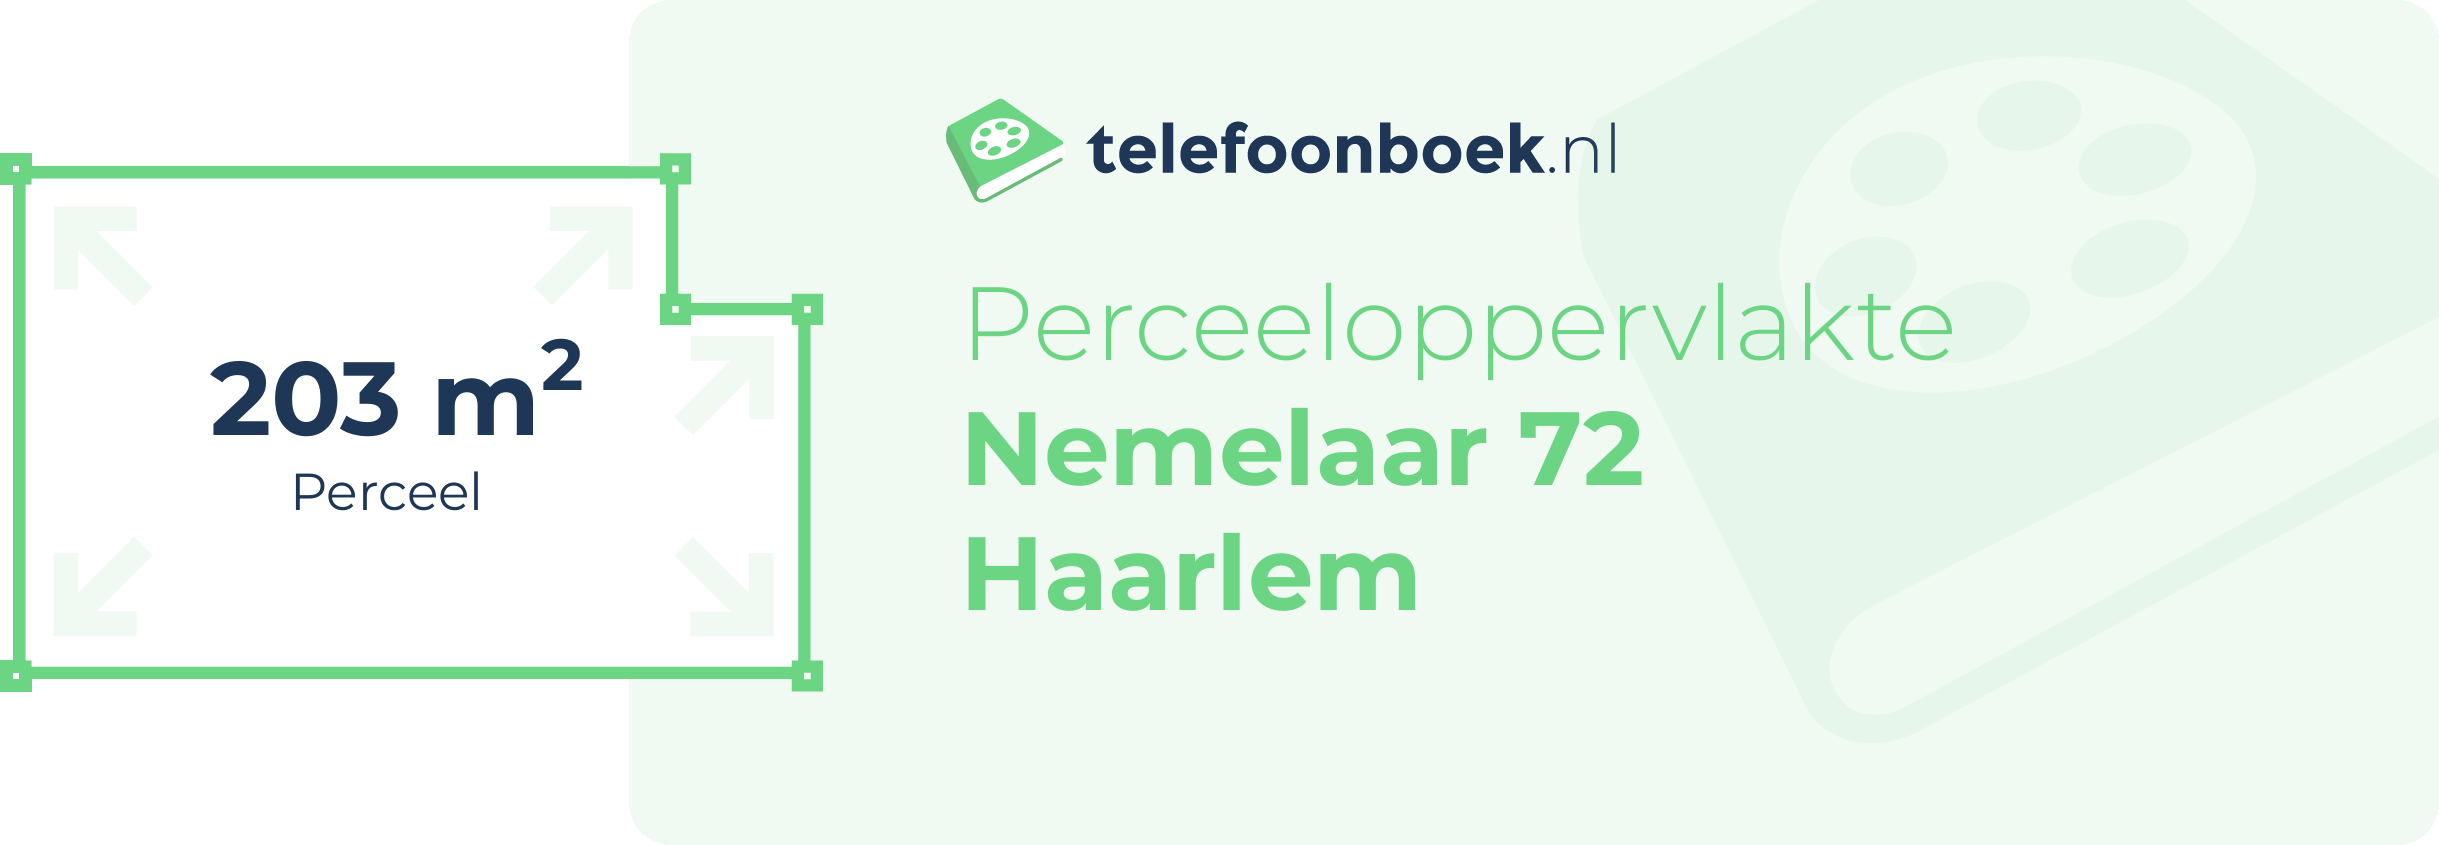 Perceeloppervlakte Nemelaar 72 Haarlem